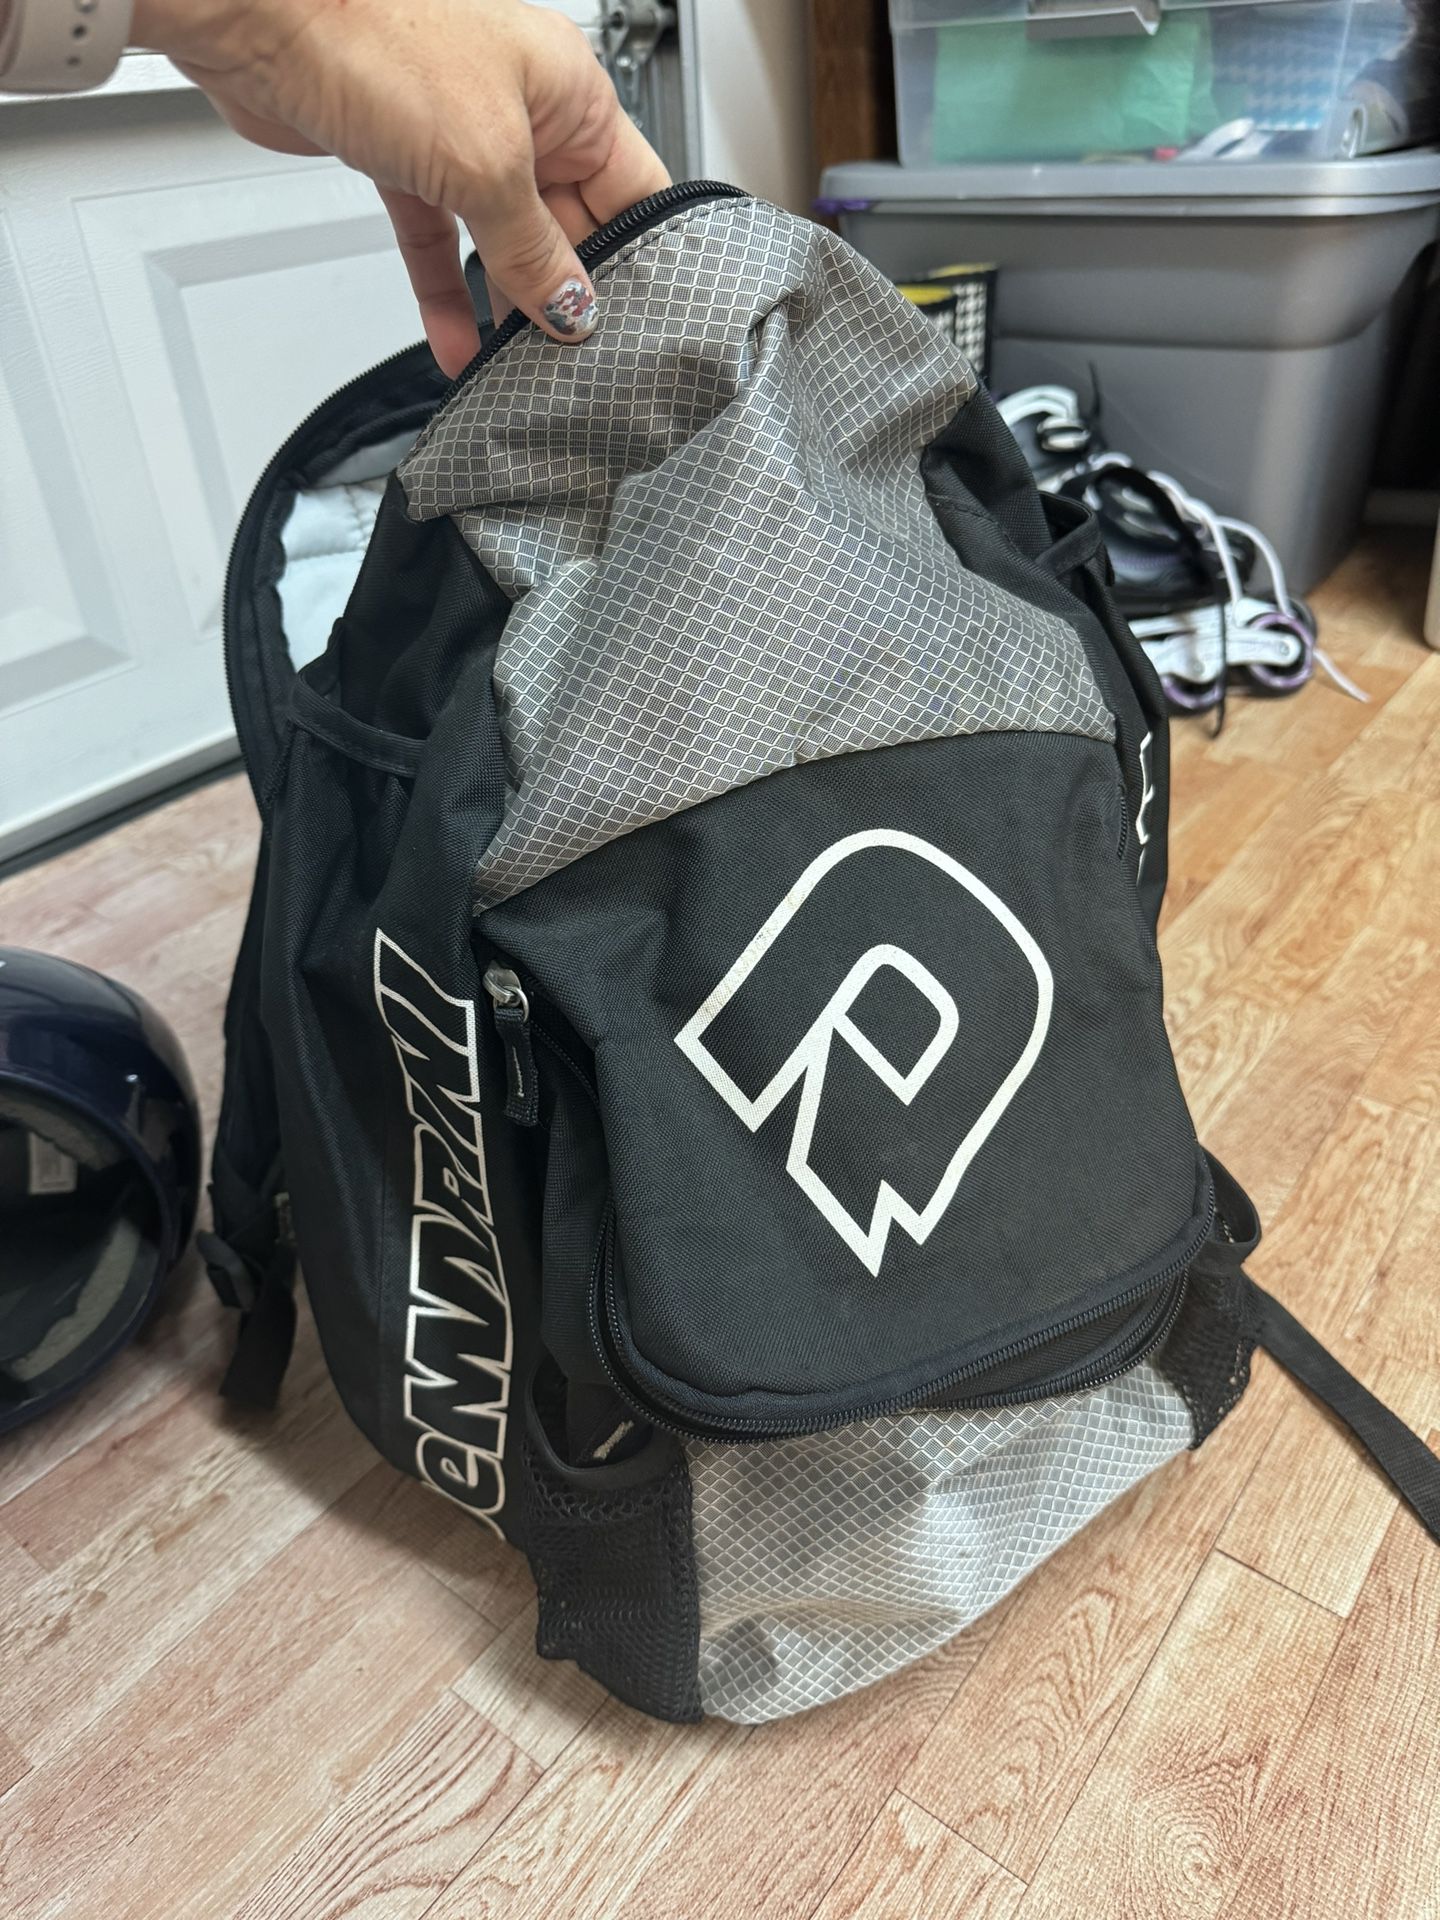 Baseball Backpack And Helmet